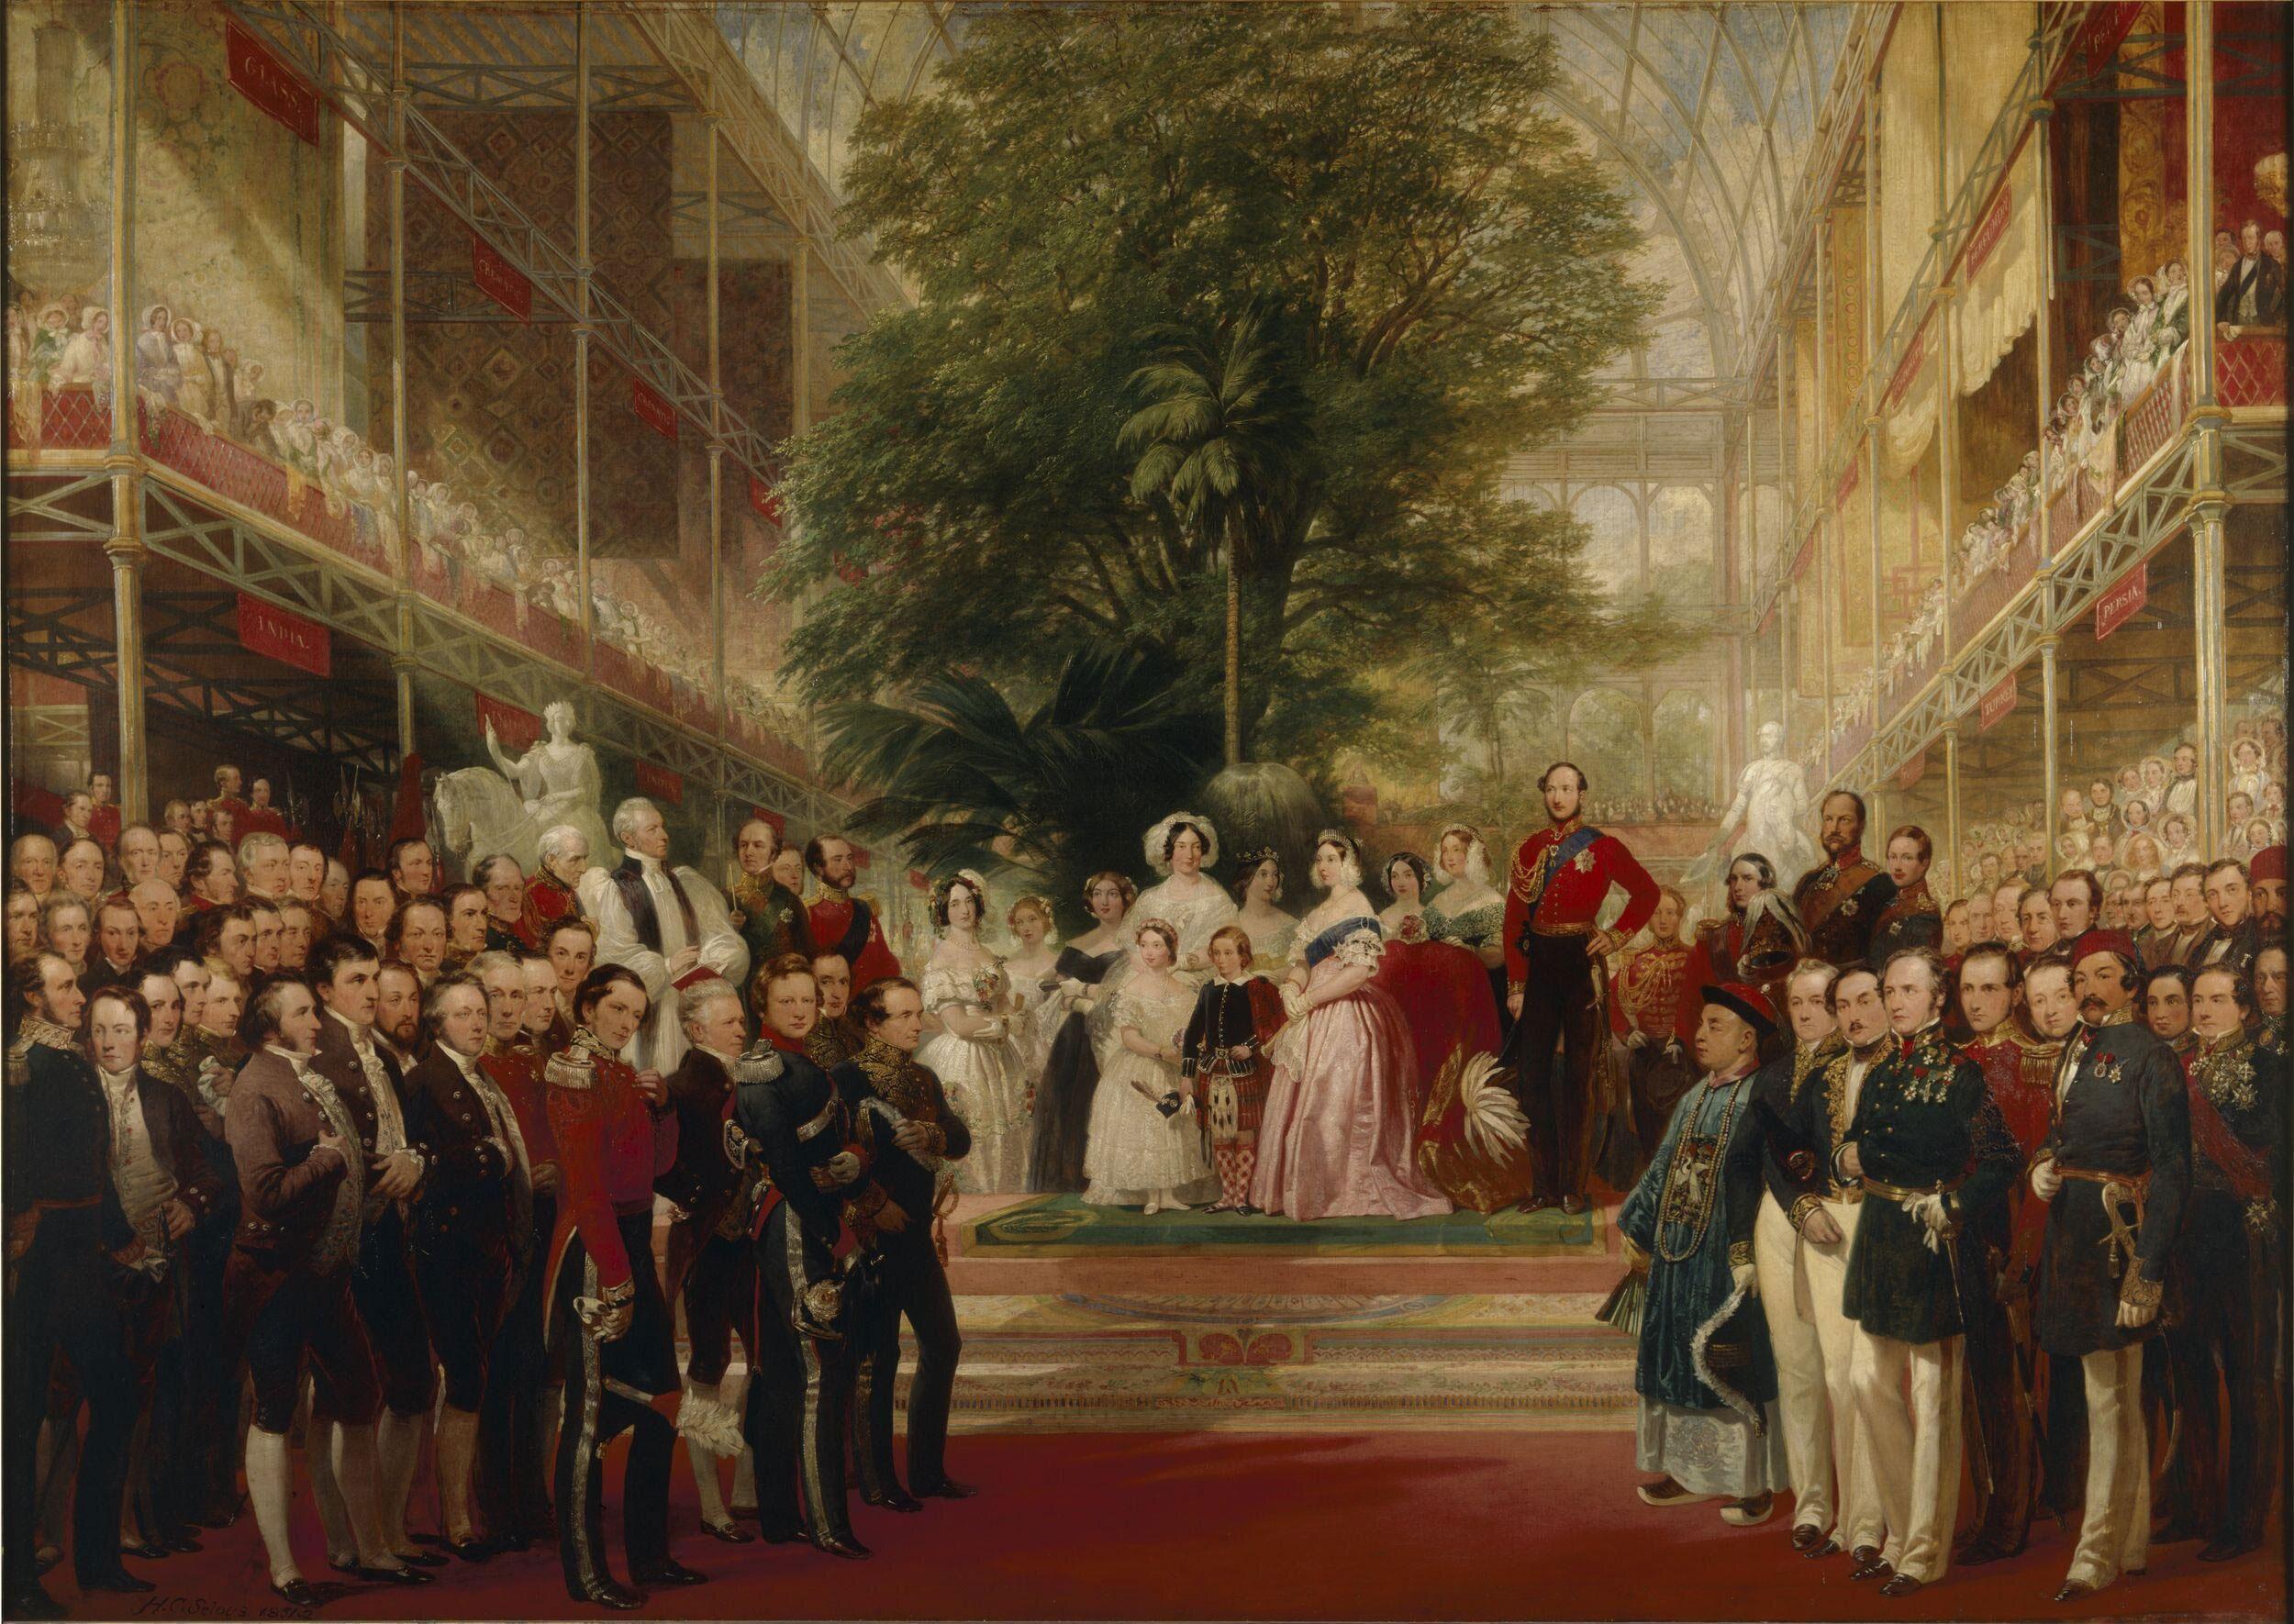 L'inauguration de la grande exposition de 1851. [Victoria and Albert Museum, London]